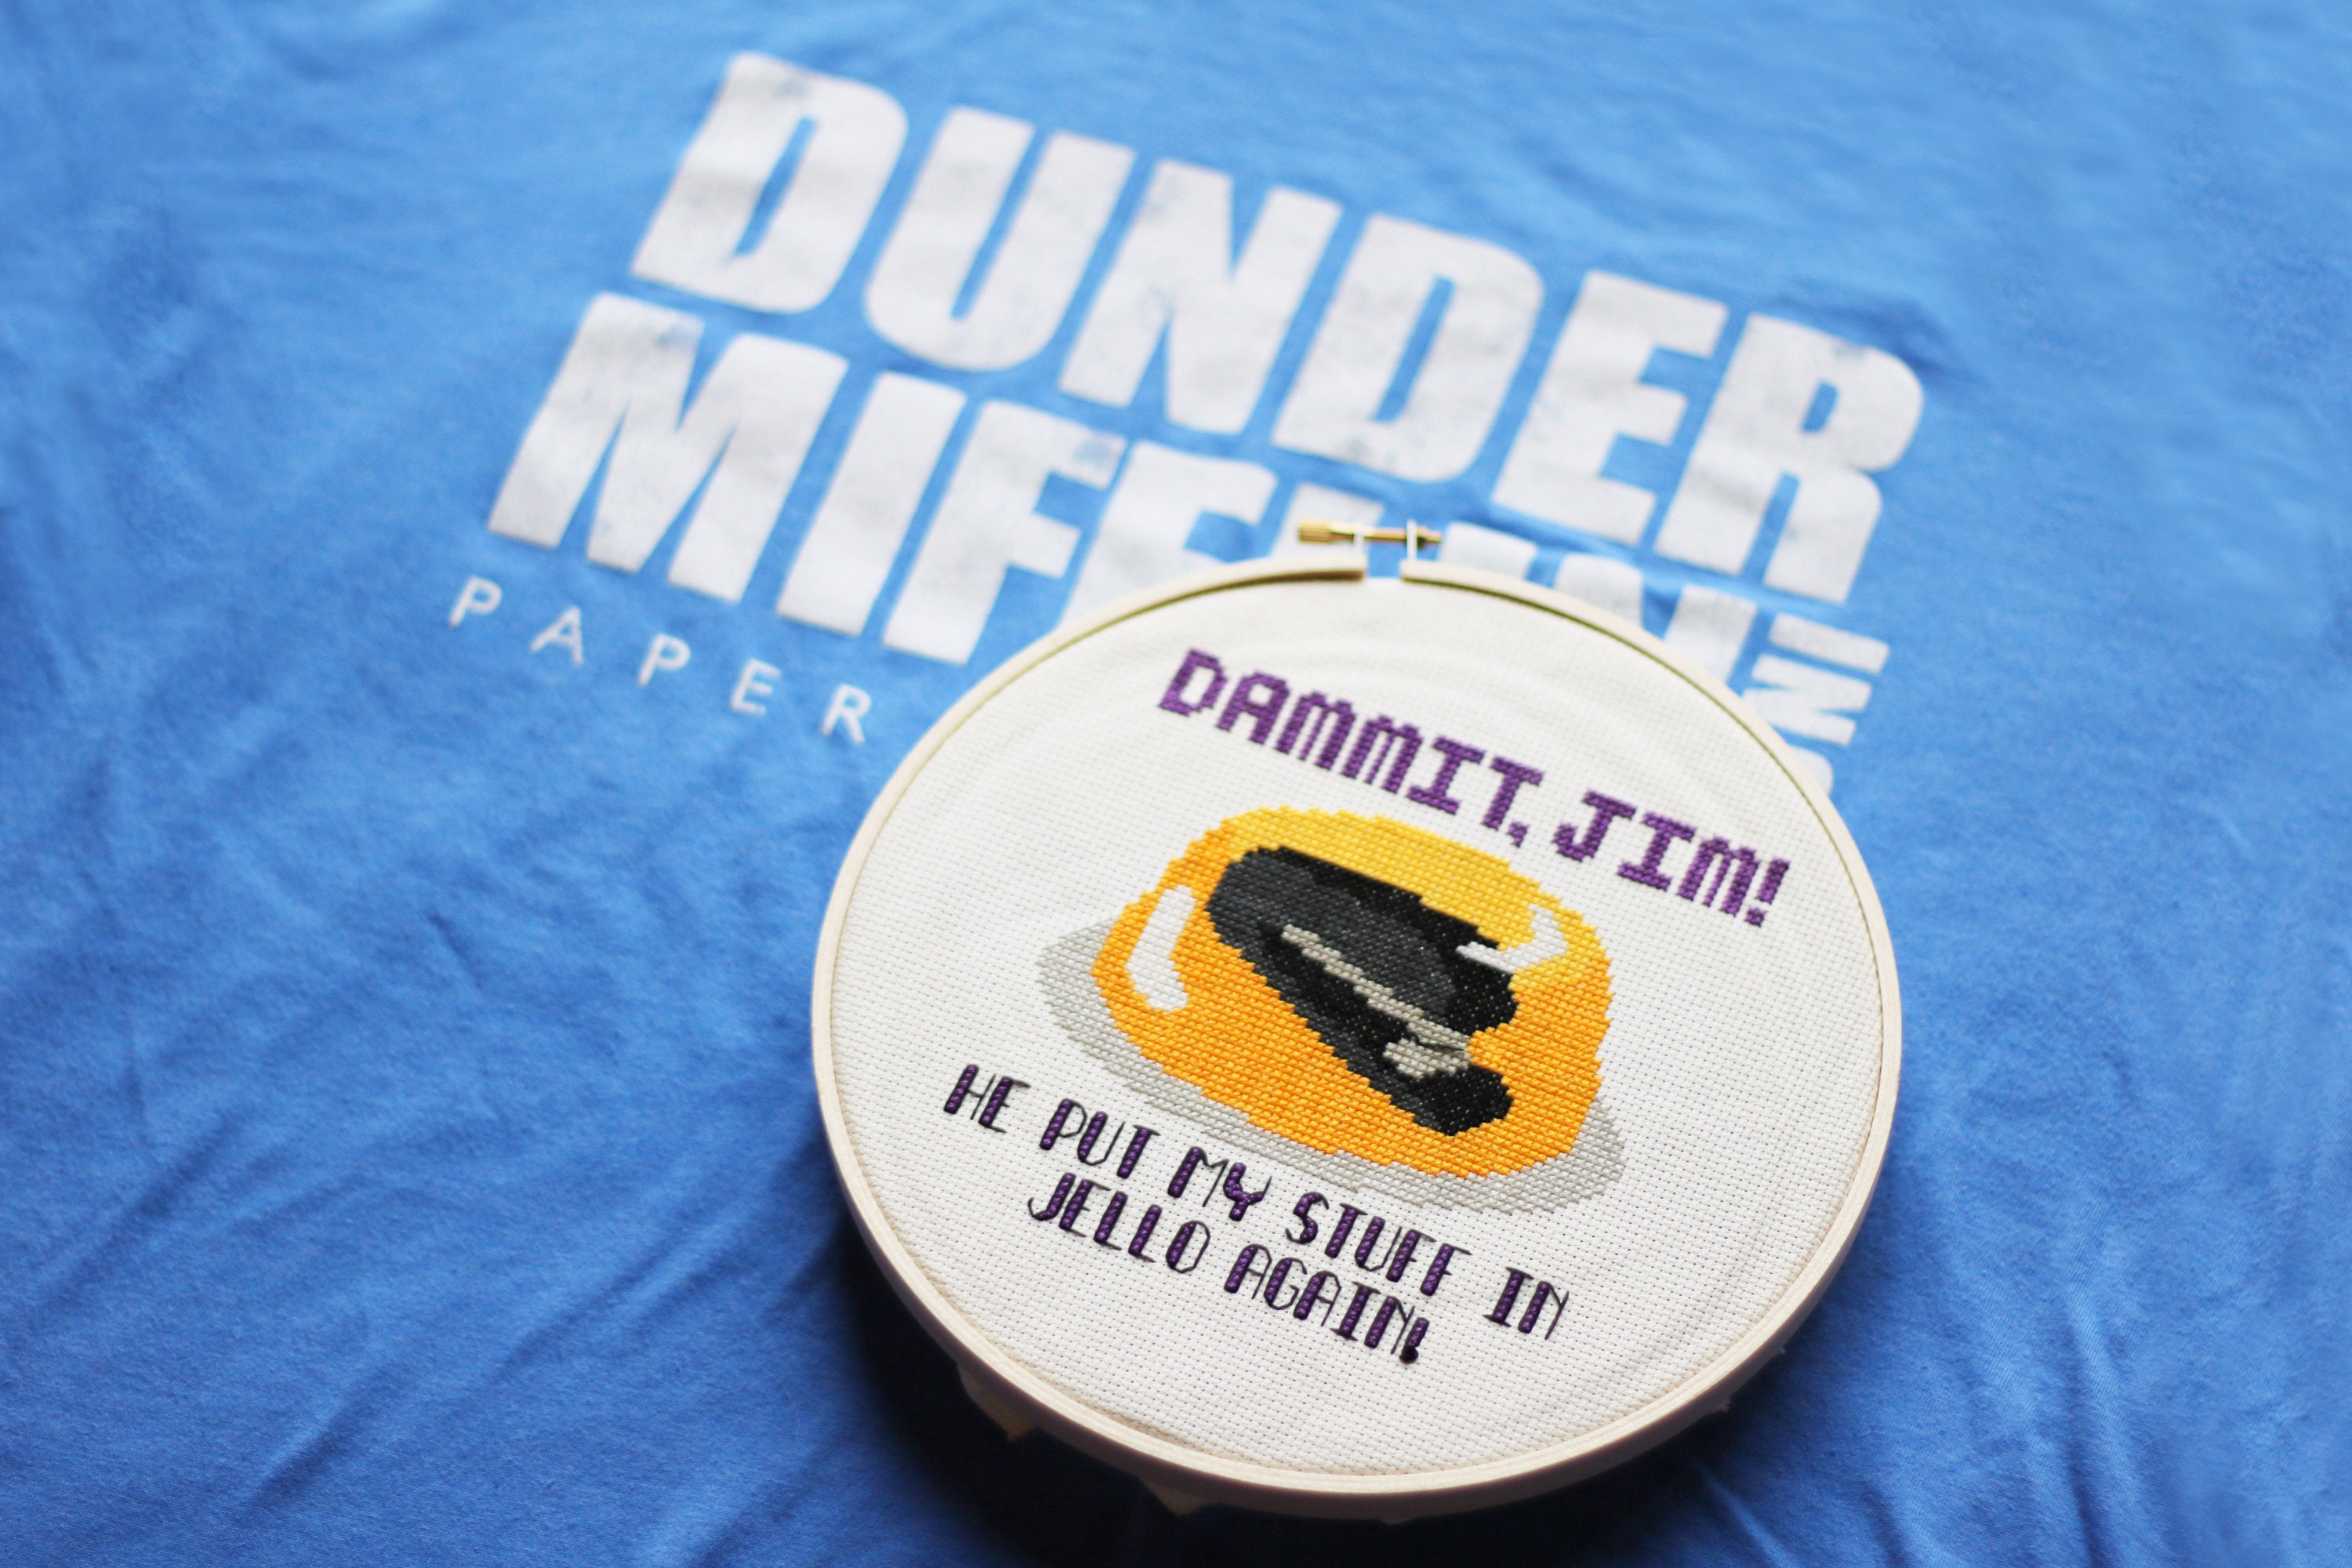 PDF PATTERN: Dunder Mifflin the Office Logo Cross (Download Now